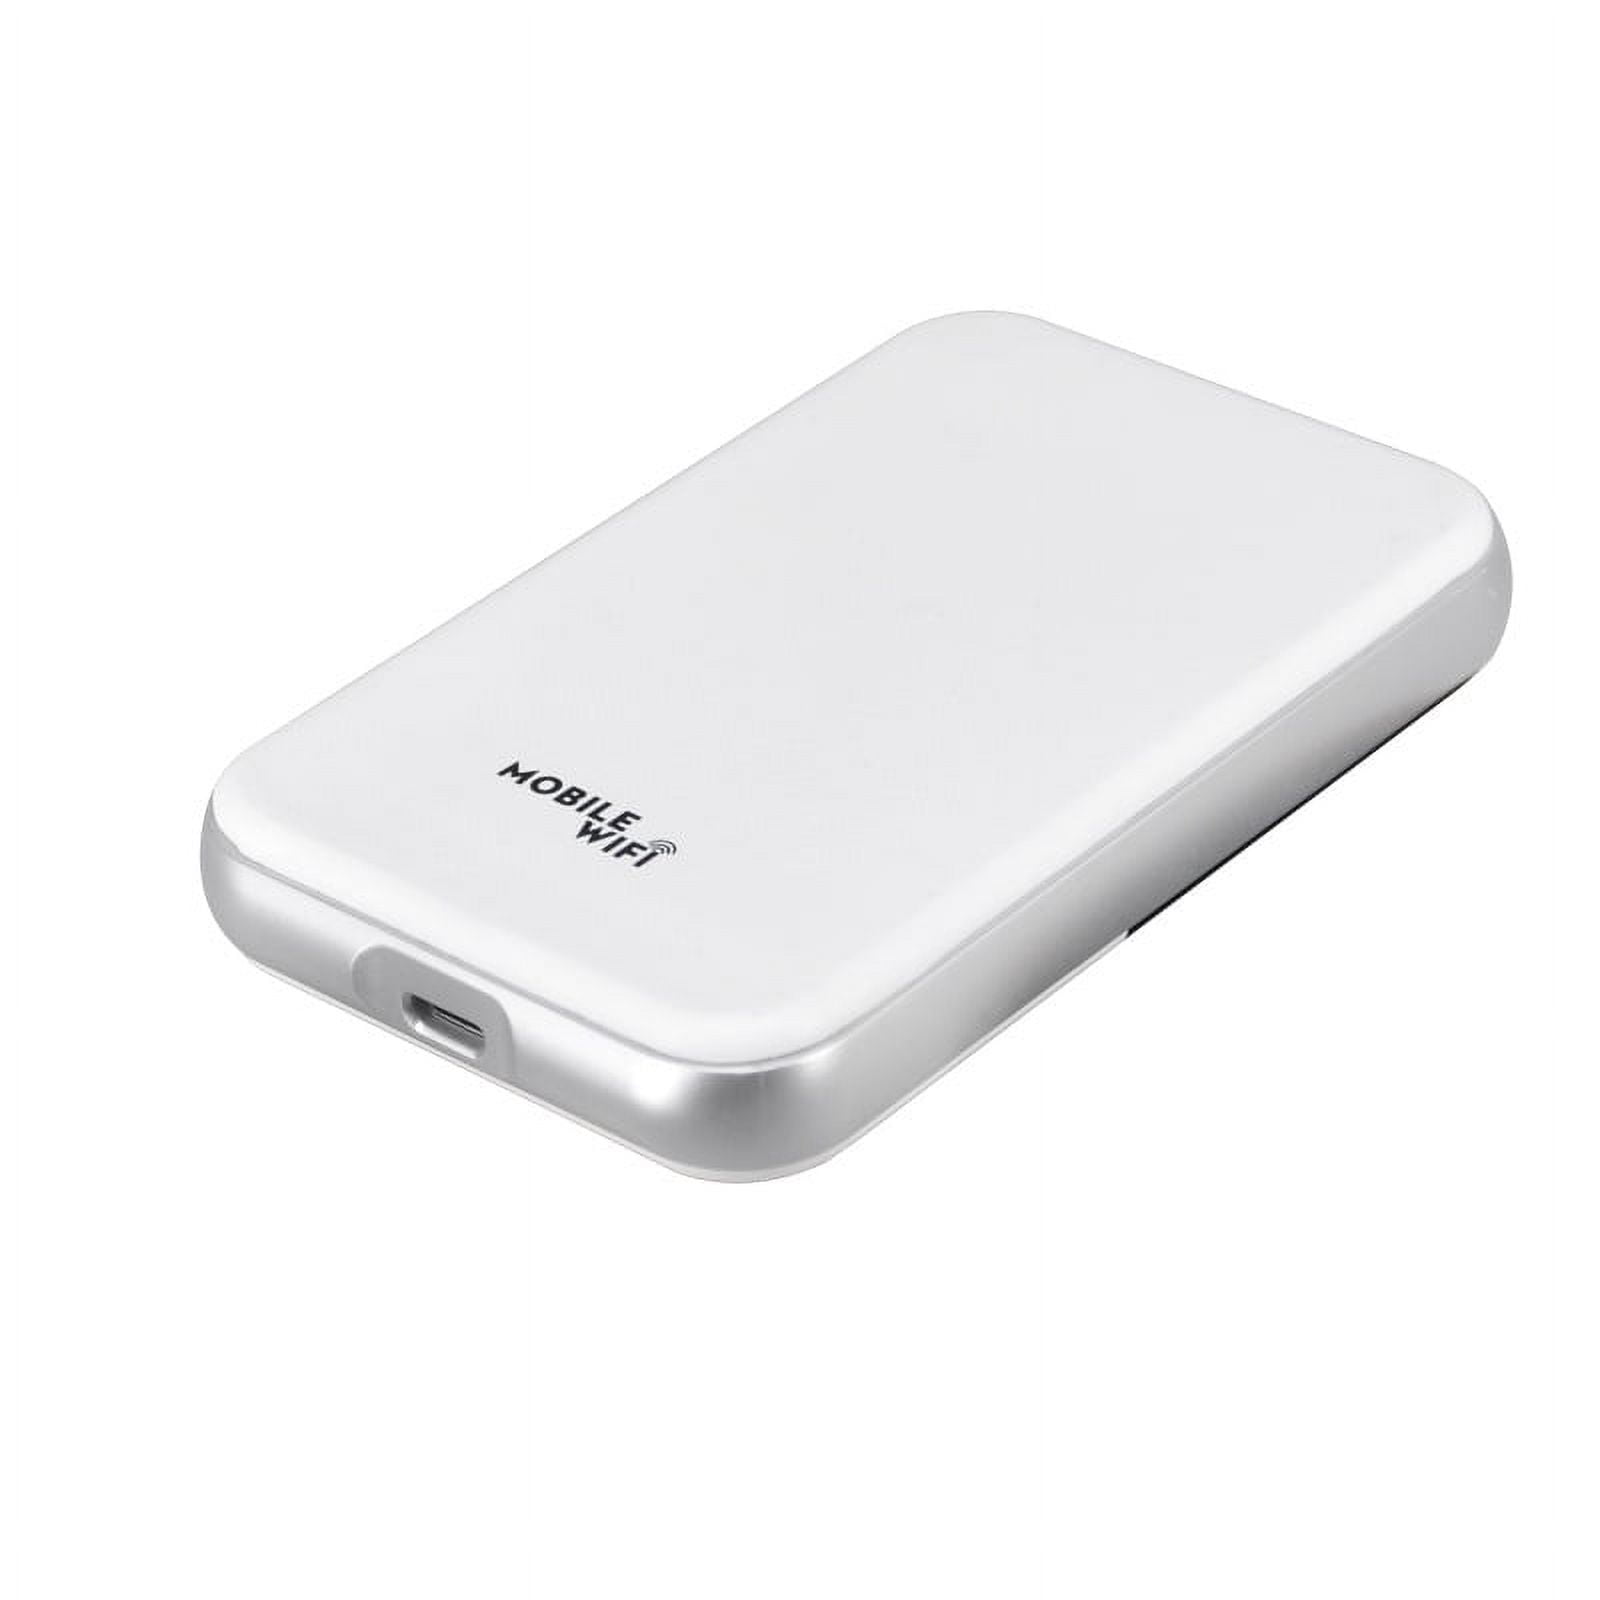 Unlocked Huawei Airbox 150M 4G LTE FDD Mobile Router wireless WIFI hotspot